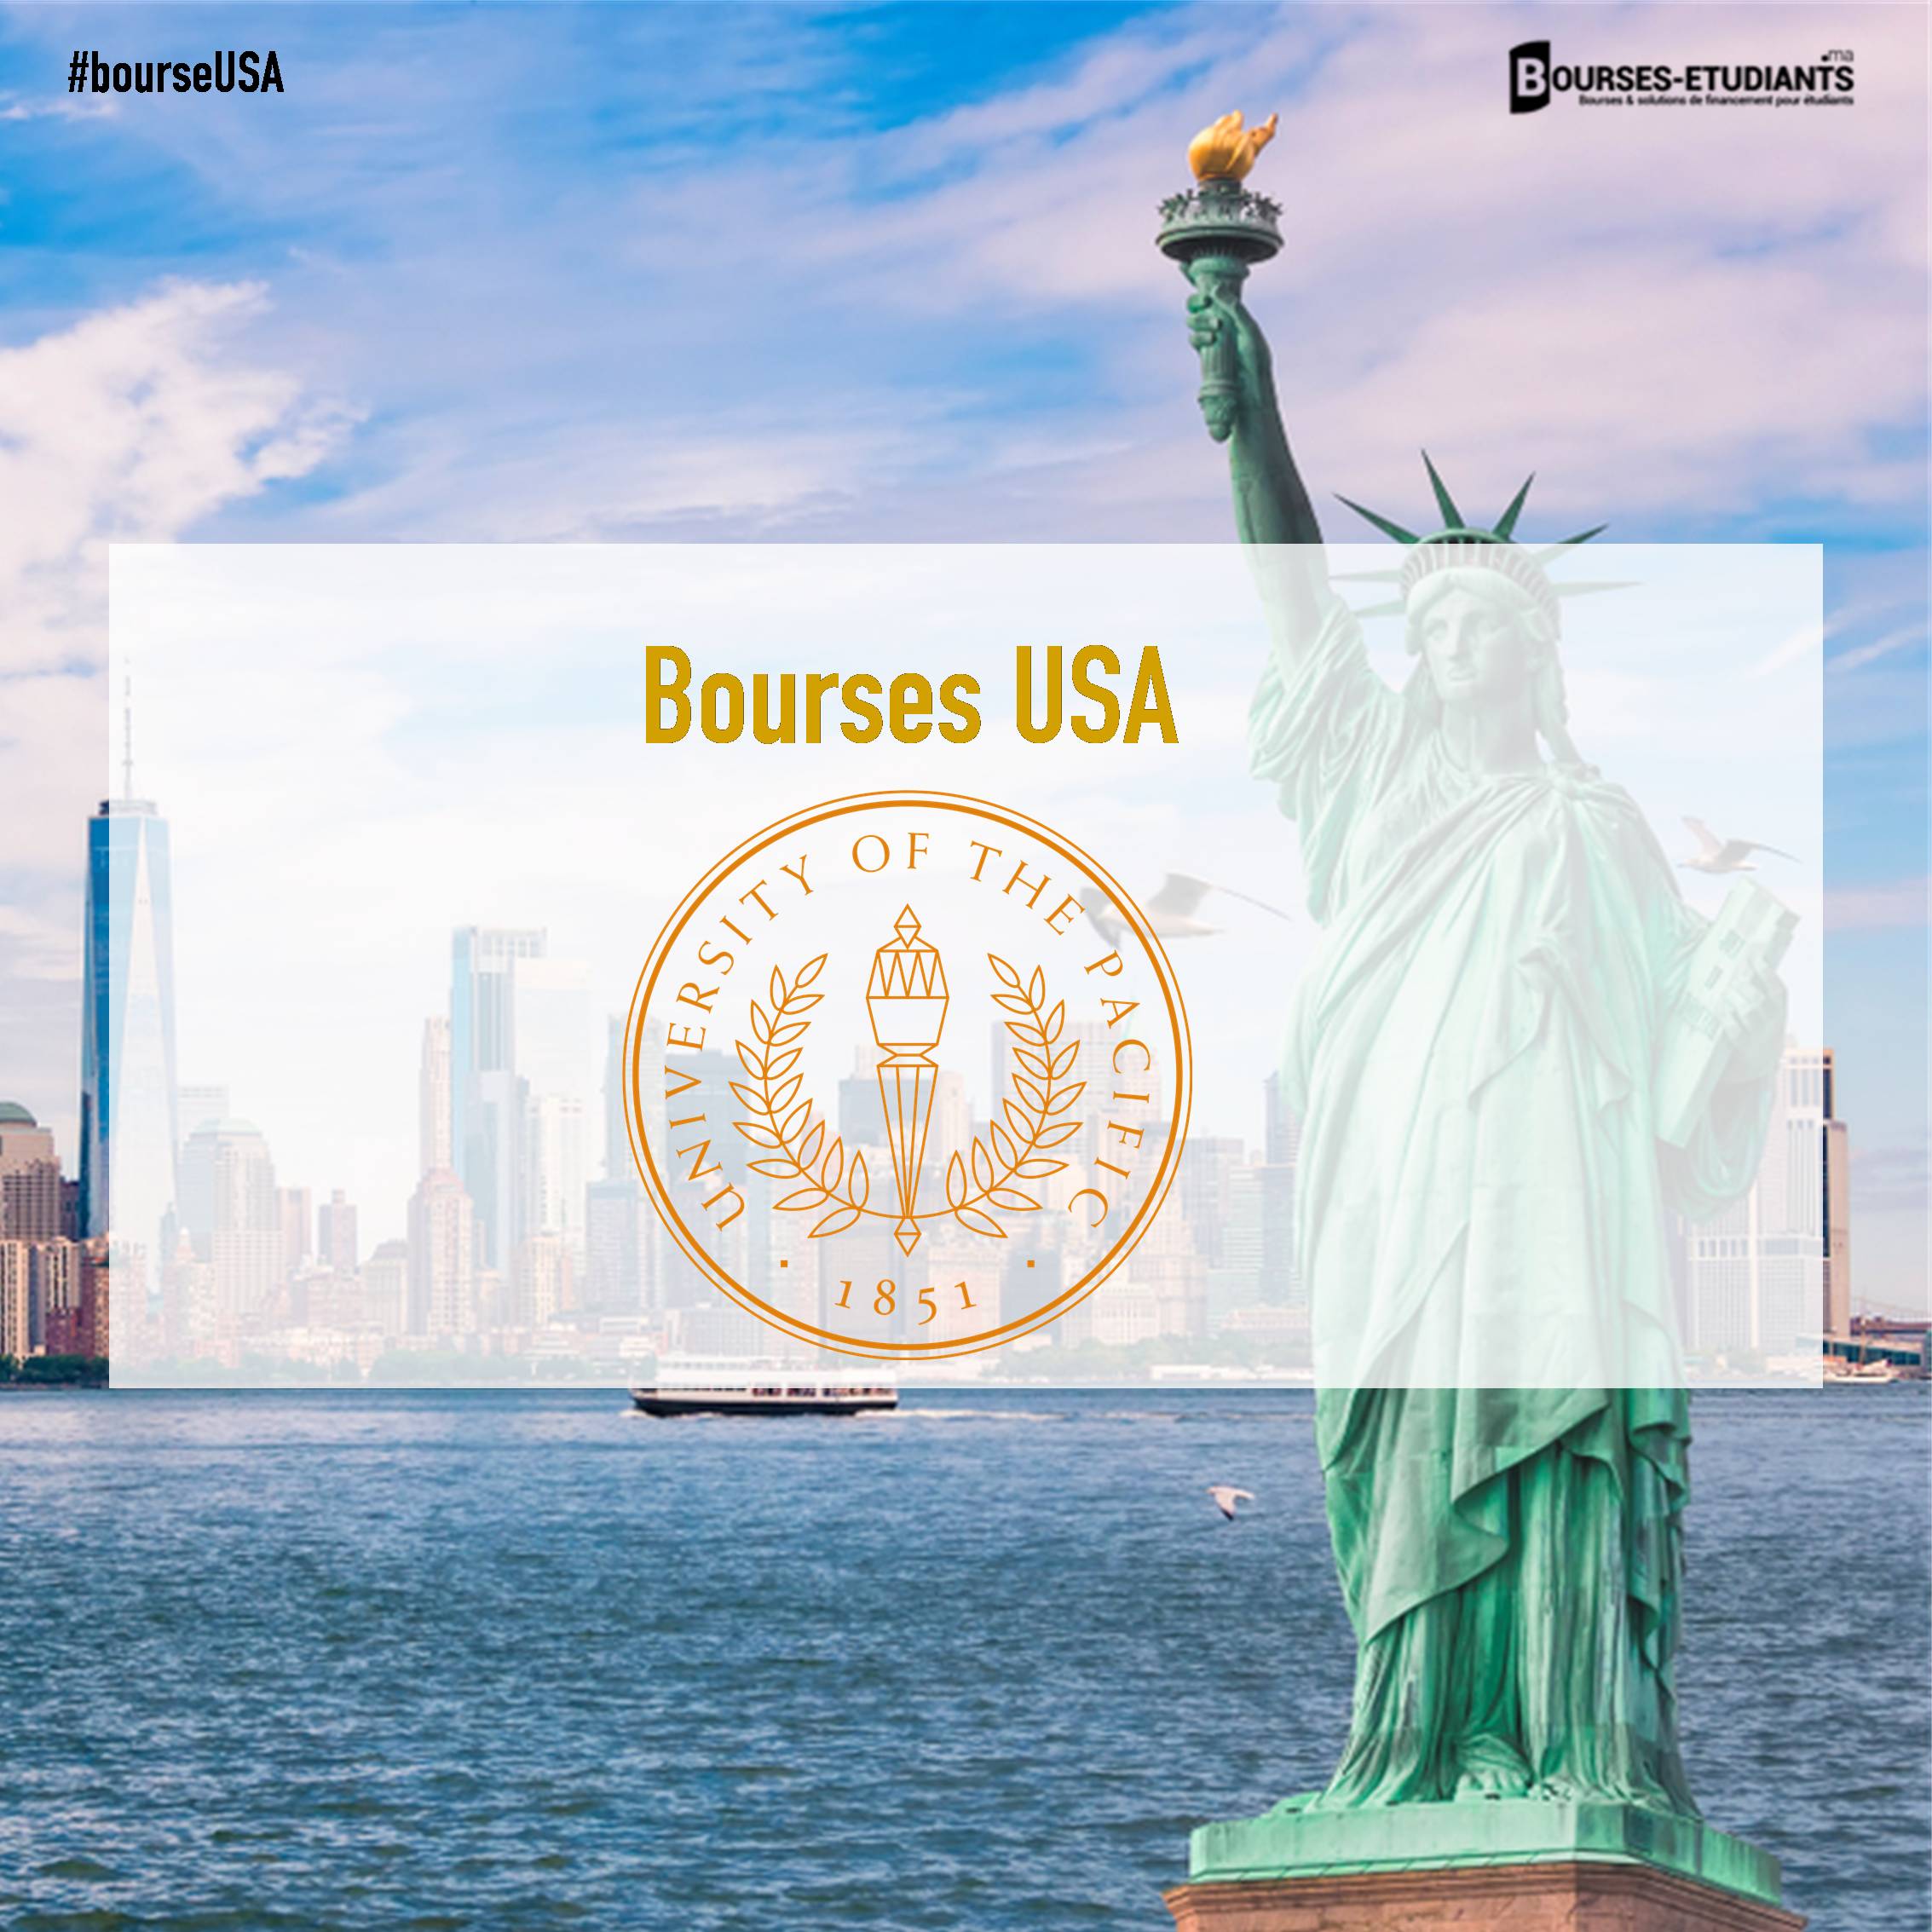 Bourses d'études USA 2020: Undergraduate program at University of the